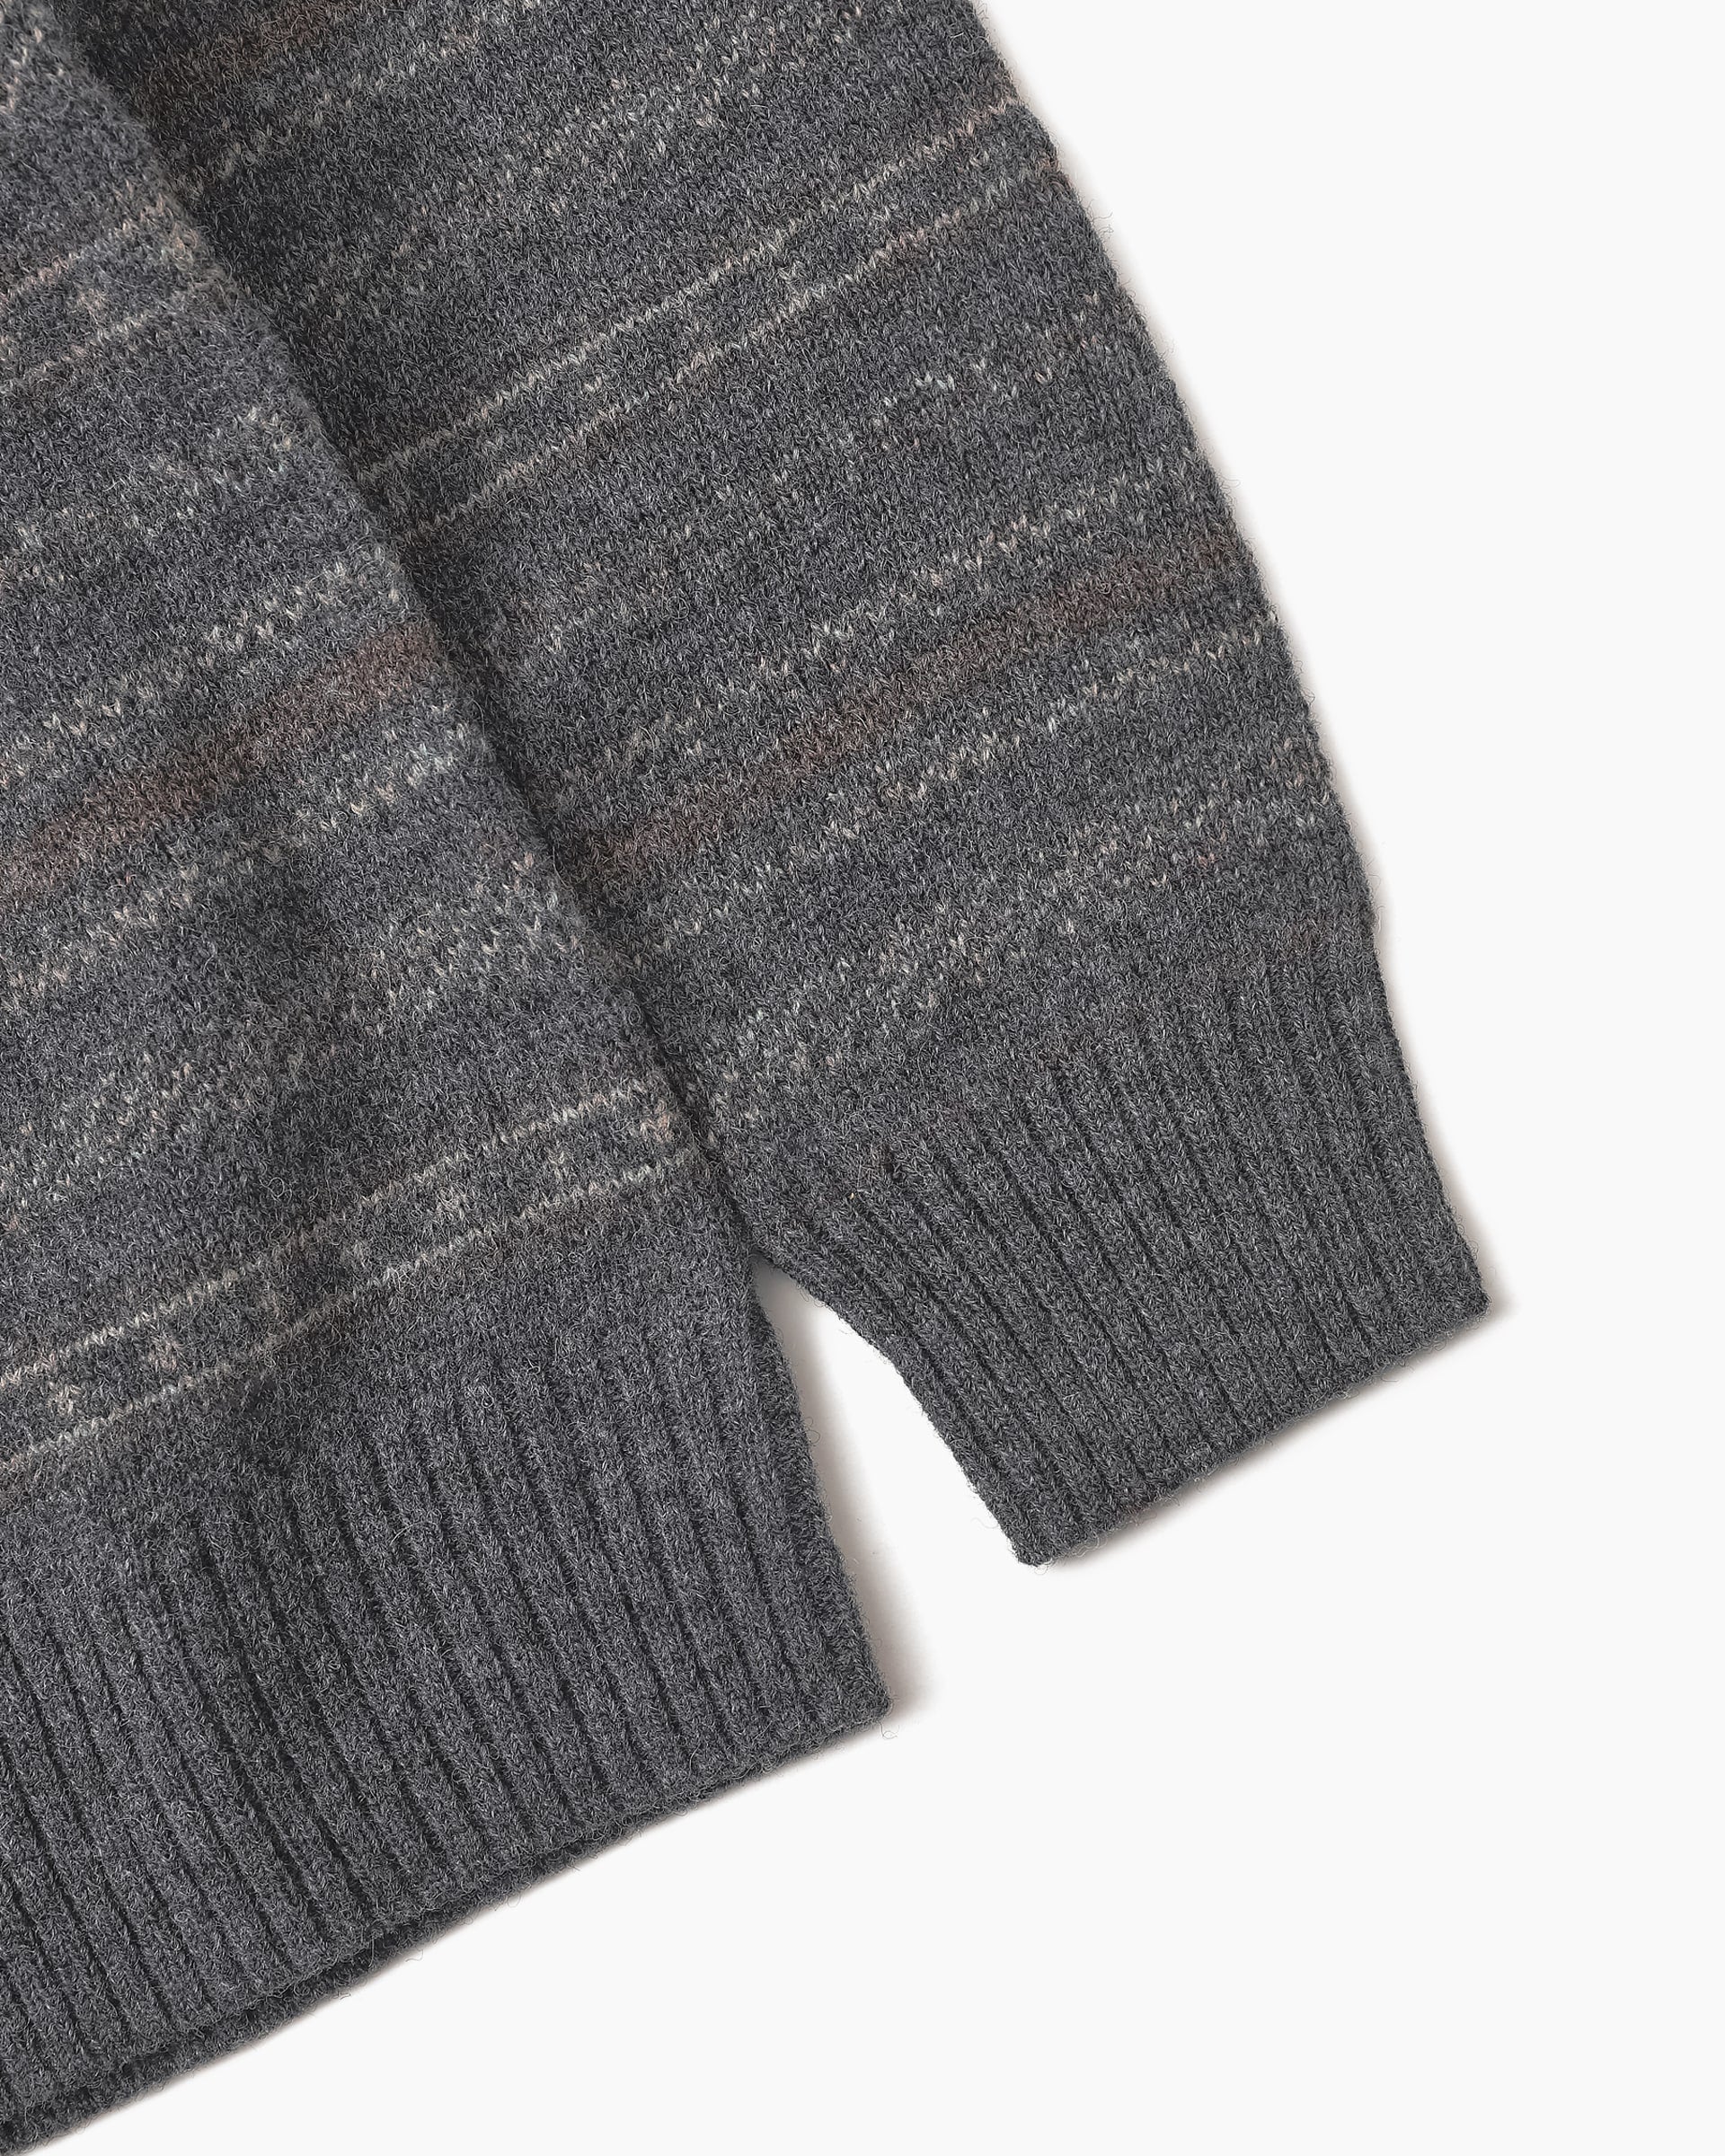 Adsum Nordic Crewneck Sweater Charcoal